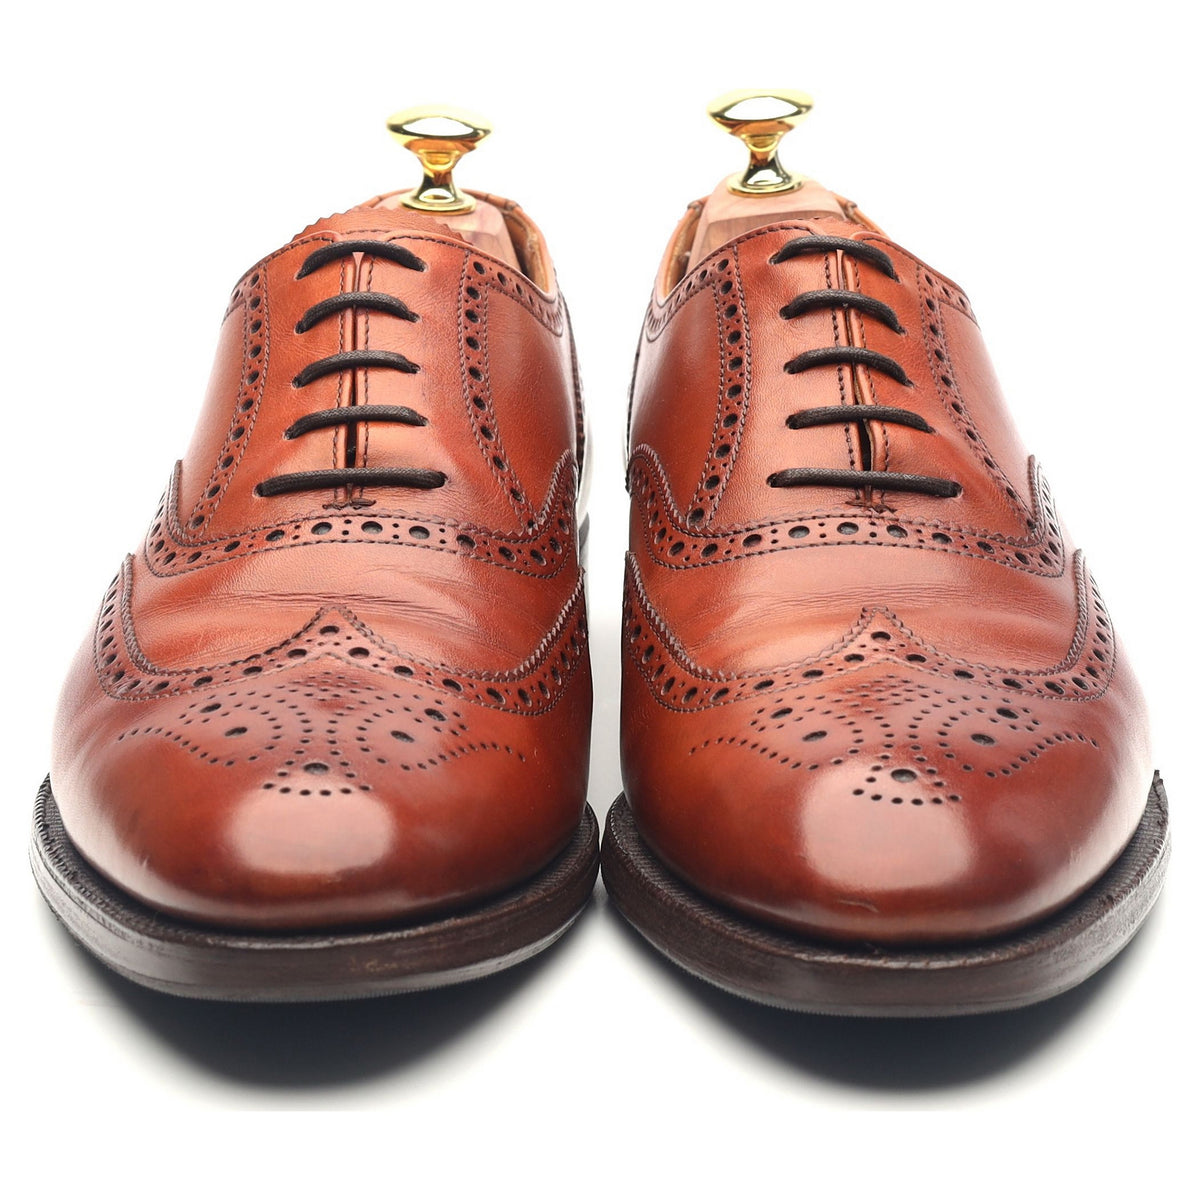 &#39;Finsbury&#39; Tan Brown Leather Brogues UK 7.5 E